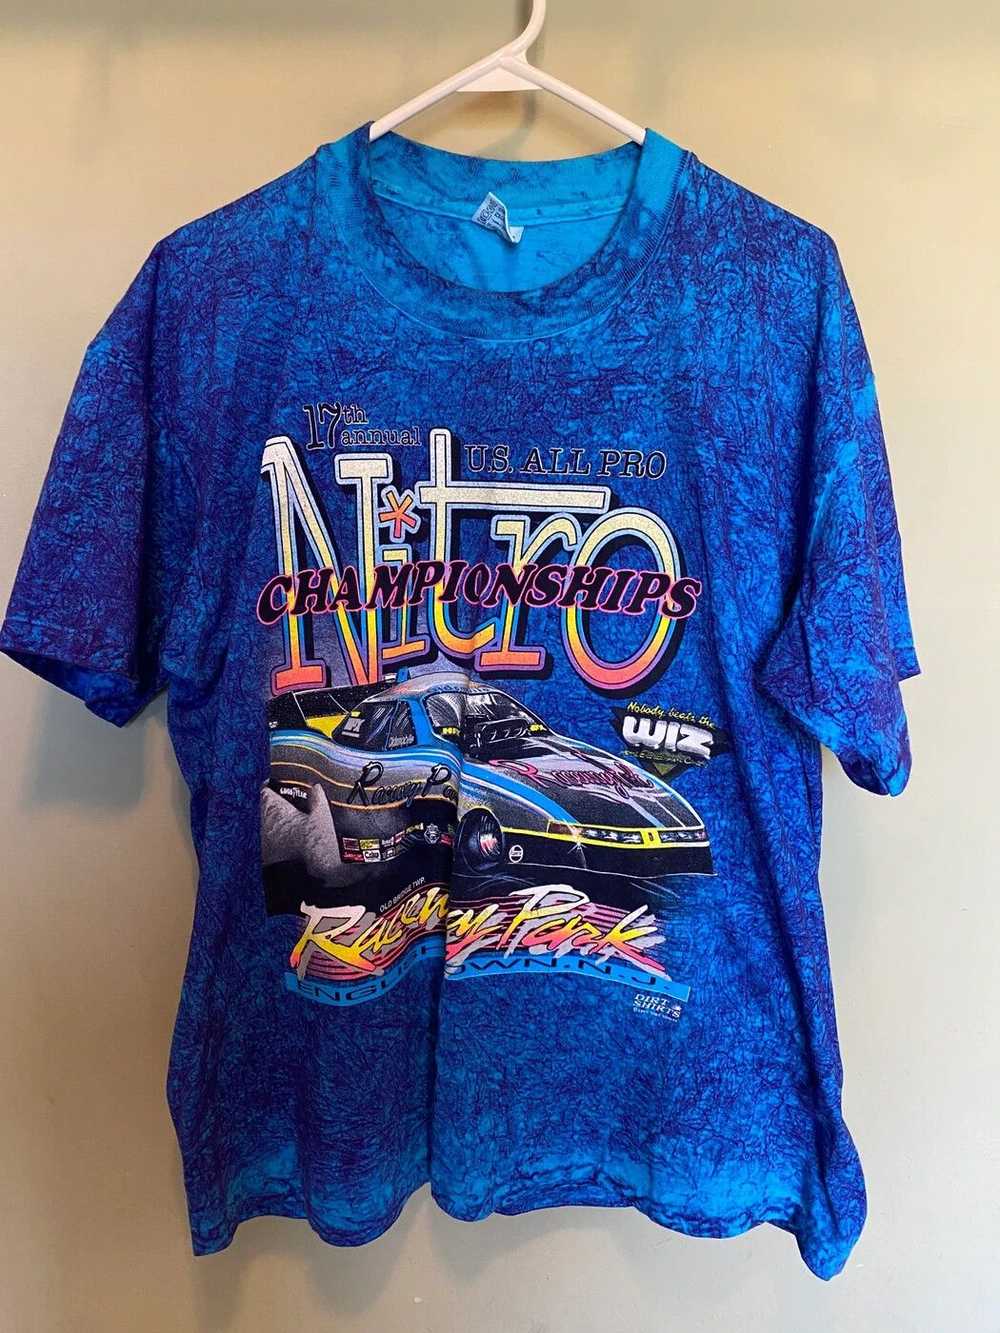 Vintage 1993 Nitro Championships Racing Tee nascar - image 1